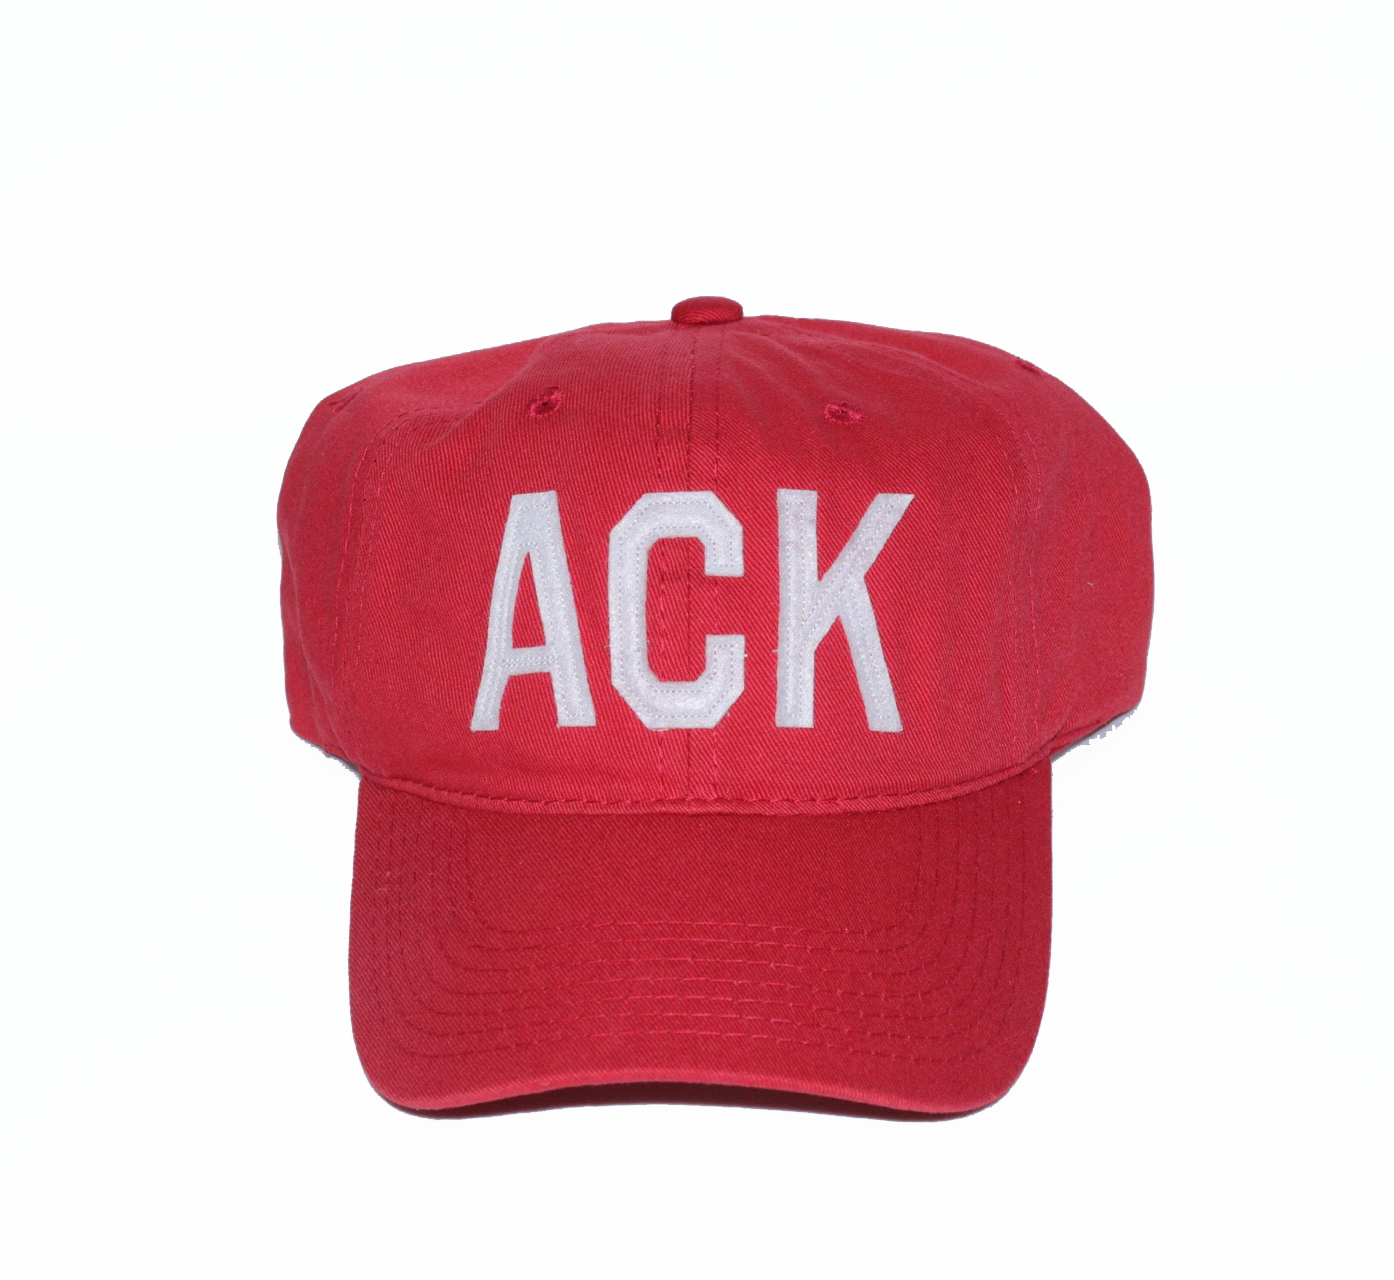 ACK - Nantucket, MA Hat